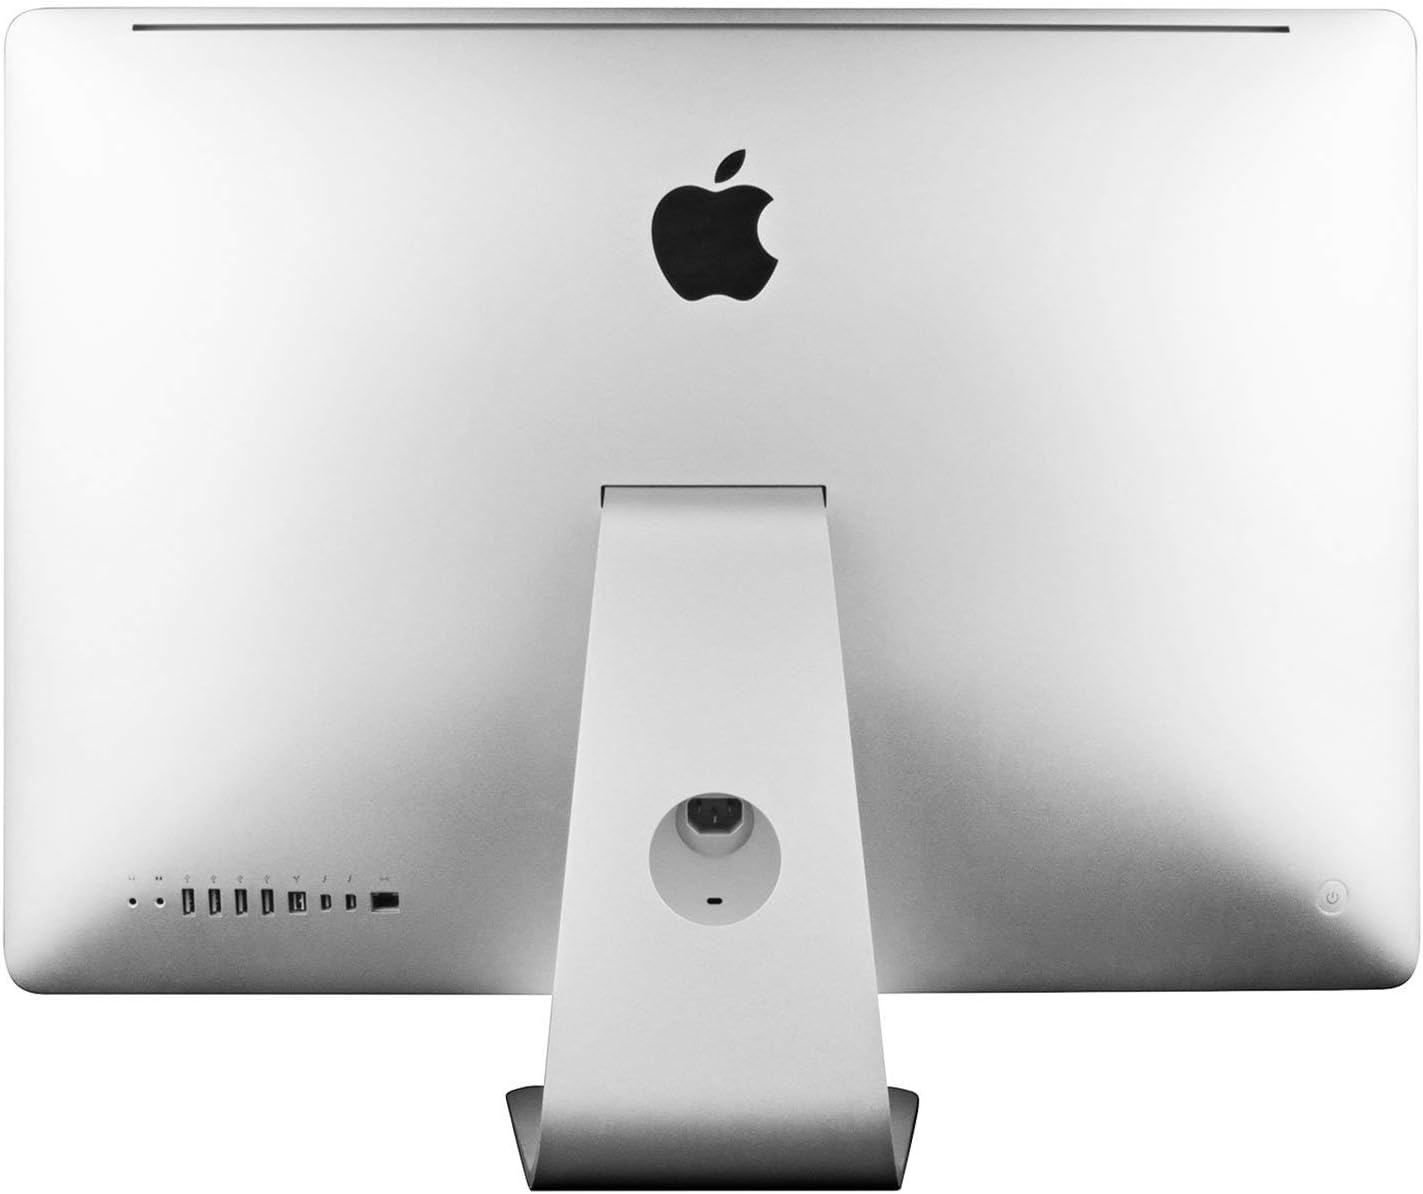 Apple iMac 27" - 2011 Model - Intel Core i5 2.7Ghz CPU